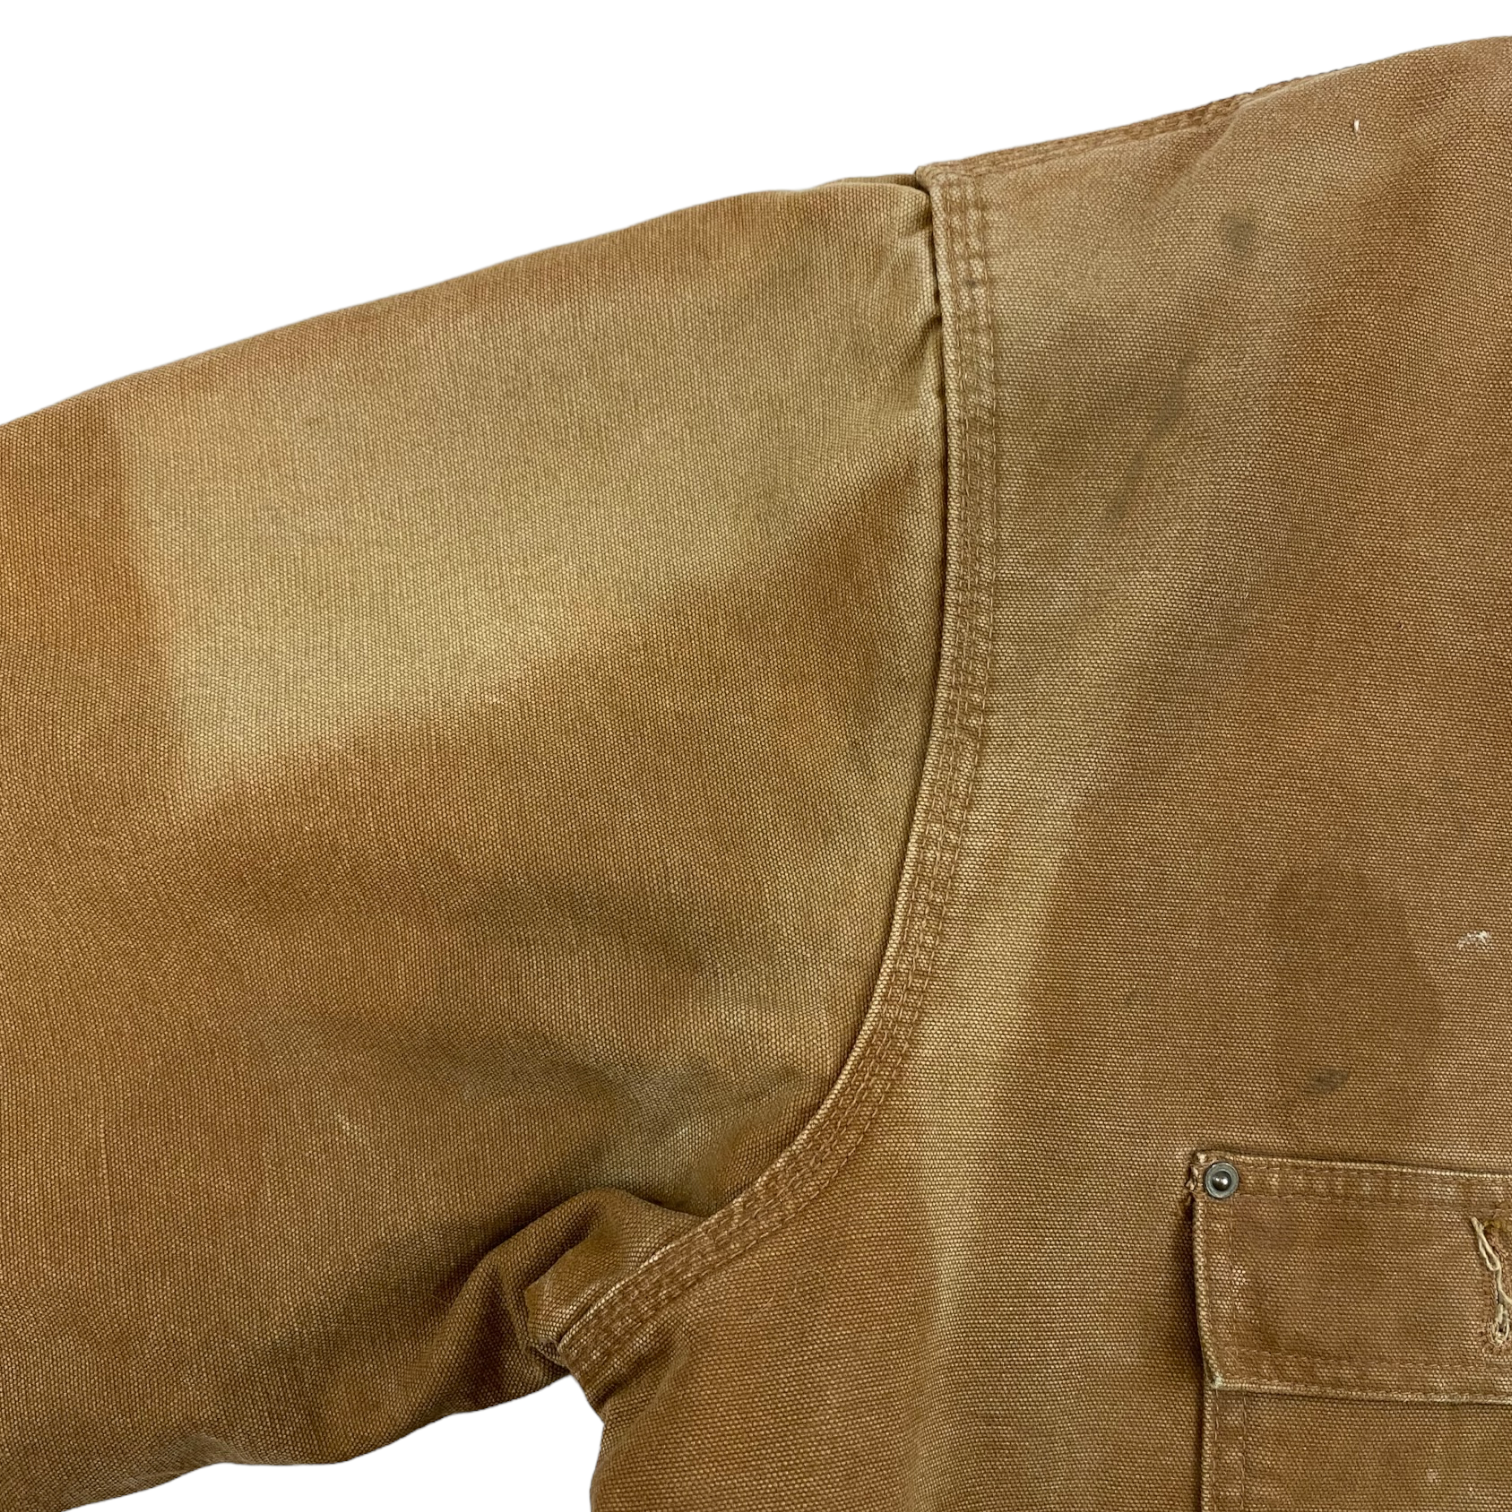 Vintage Carhartt Collared Jacket Tan